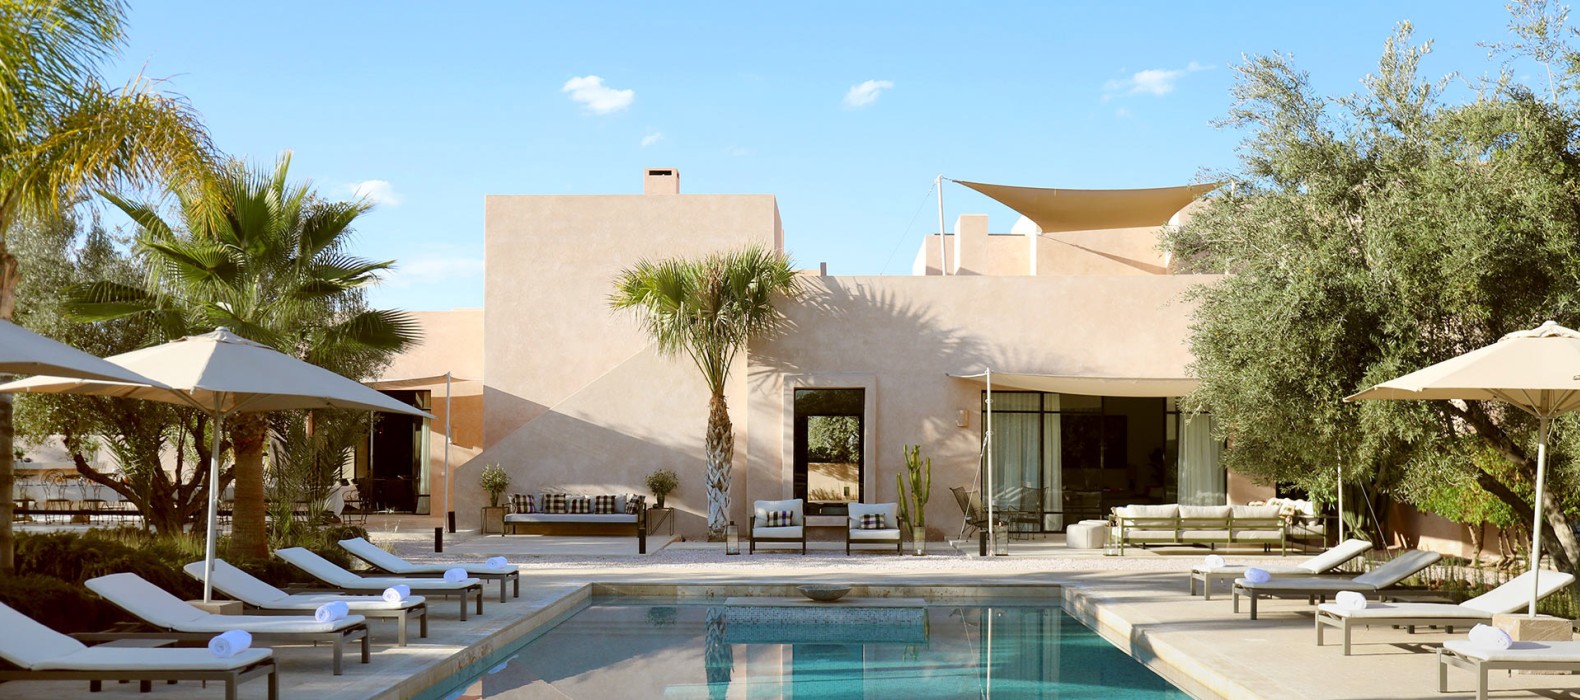 Exterior pool area of Villa Shakir in Marrakech